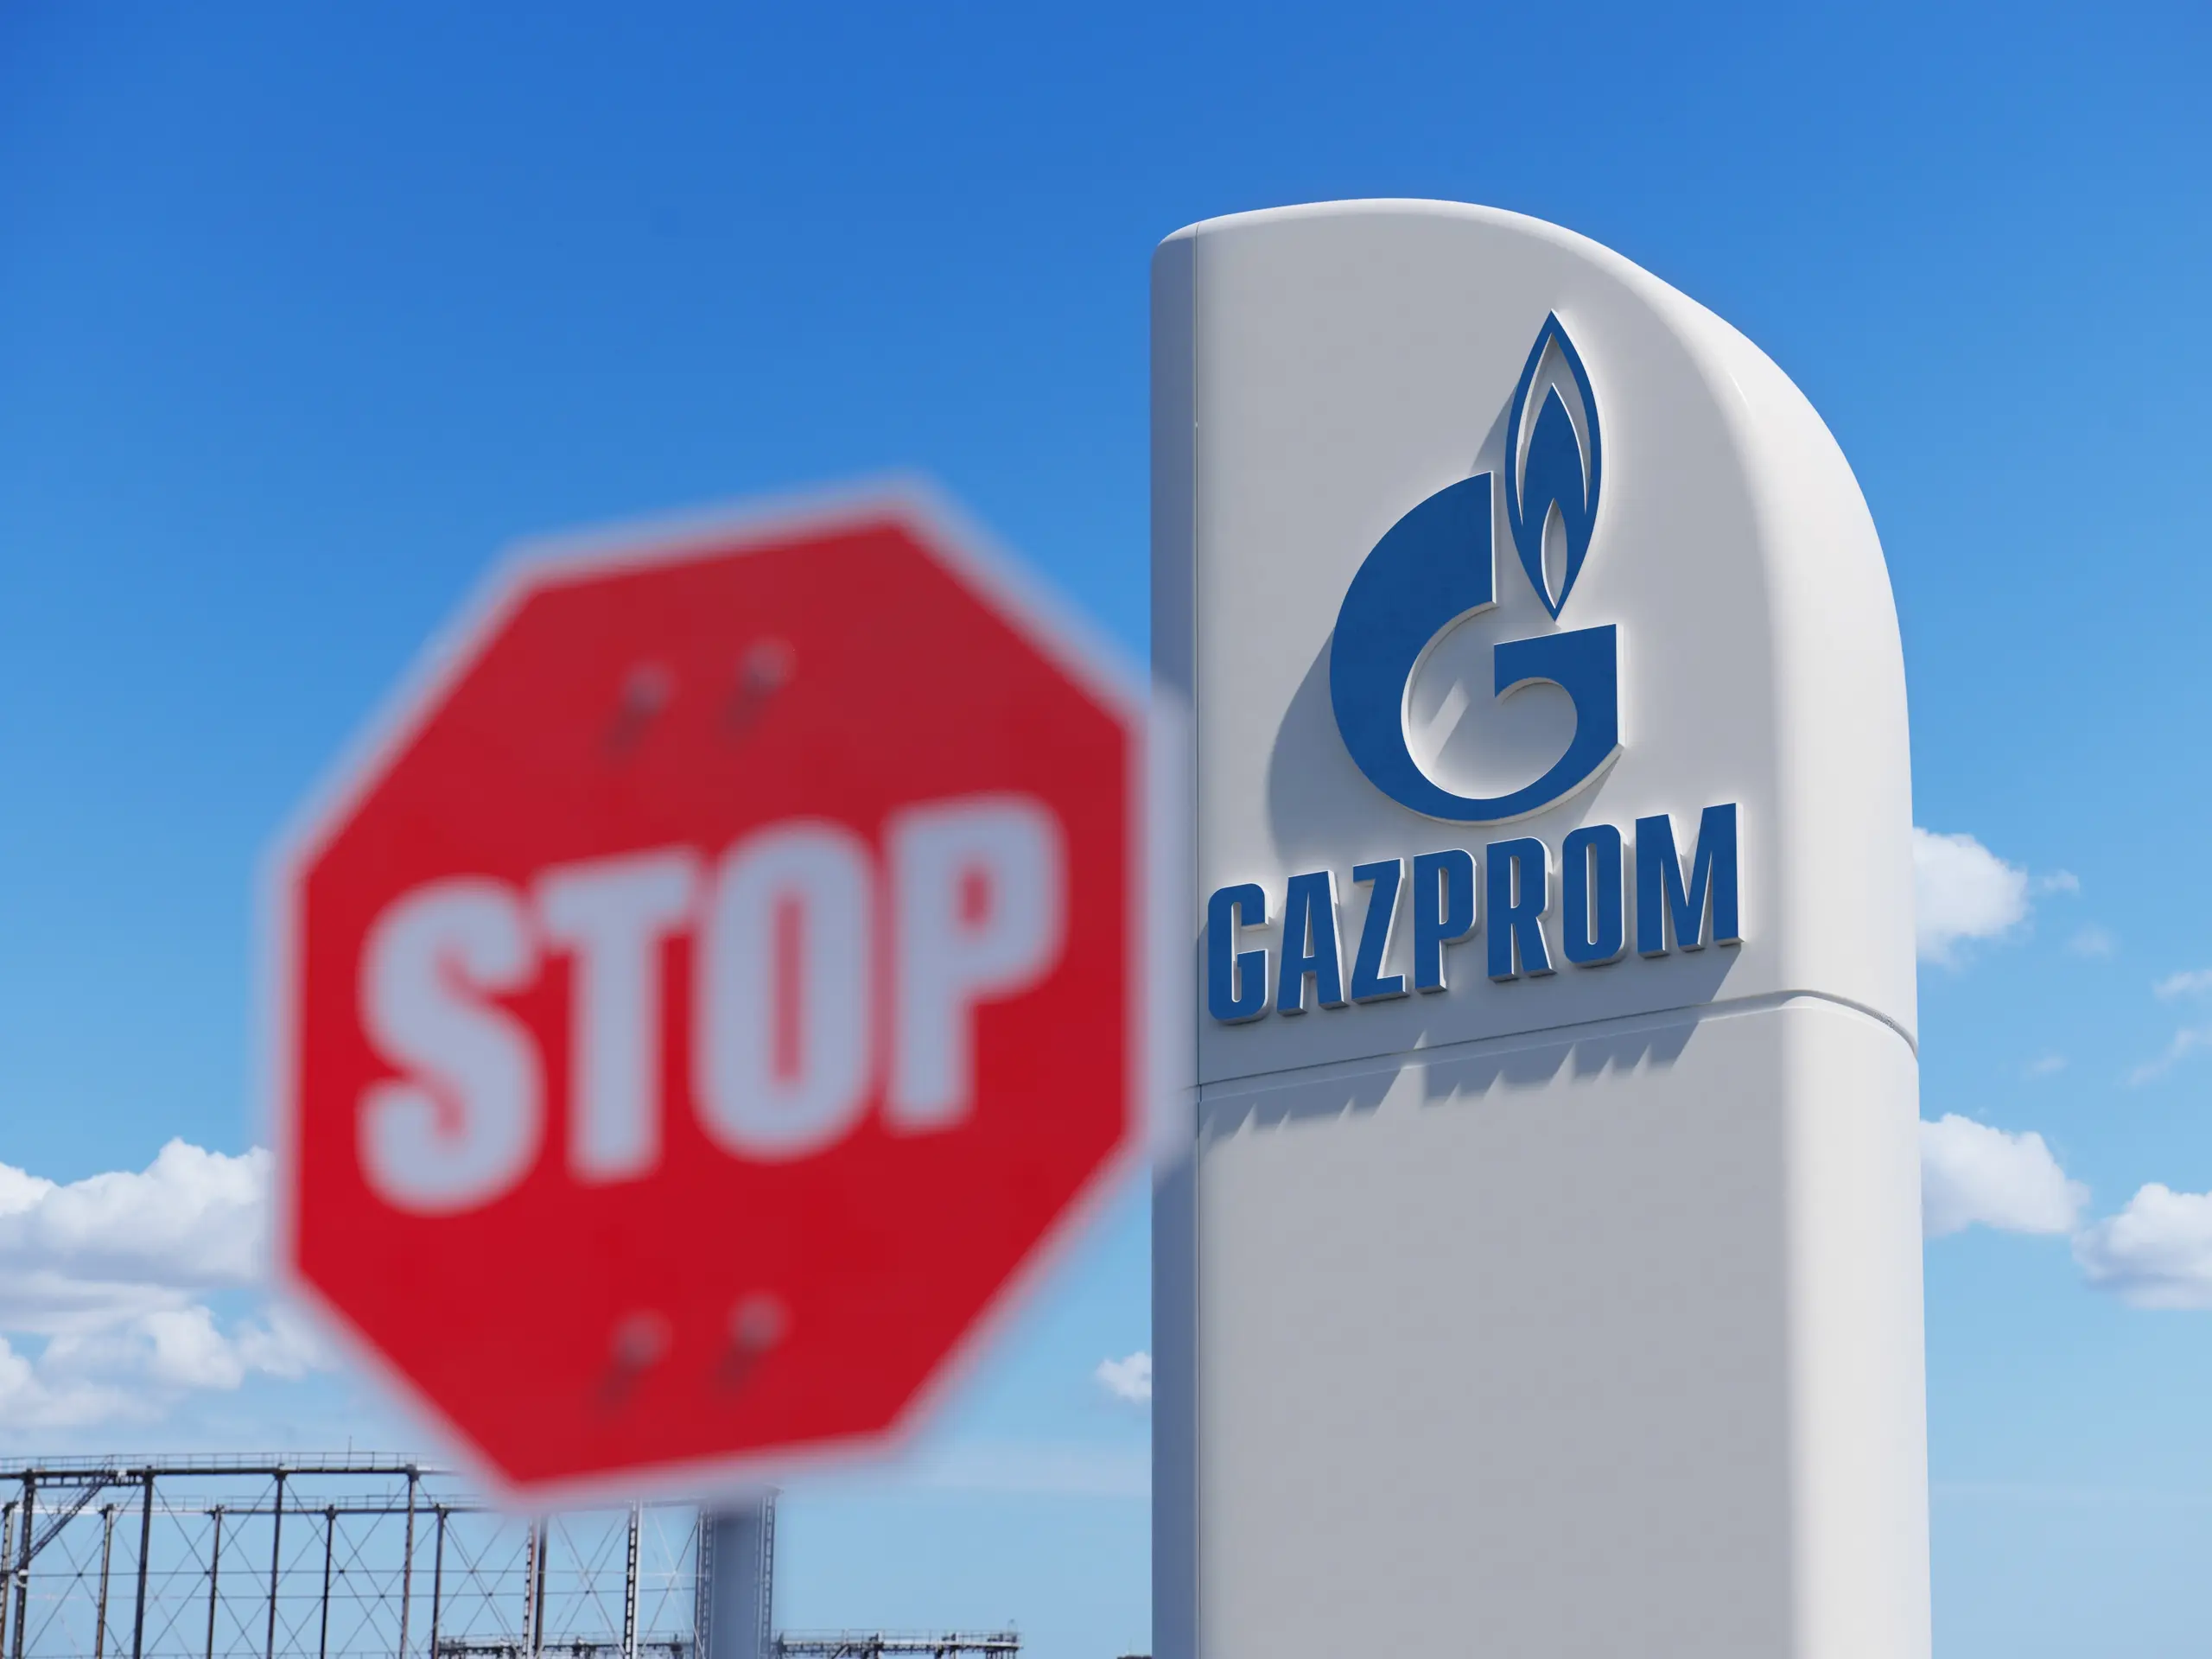 Gazprom - Das unheimliche Imperium